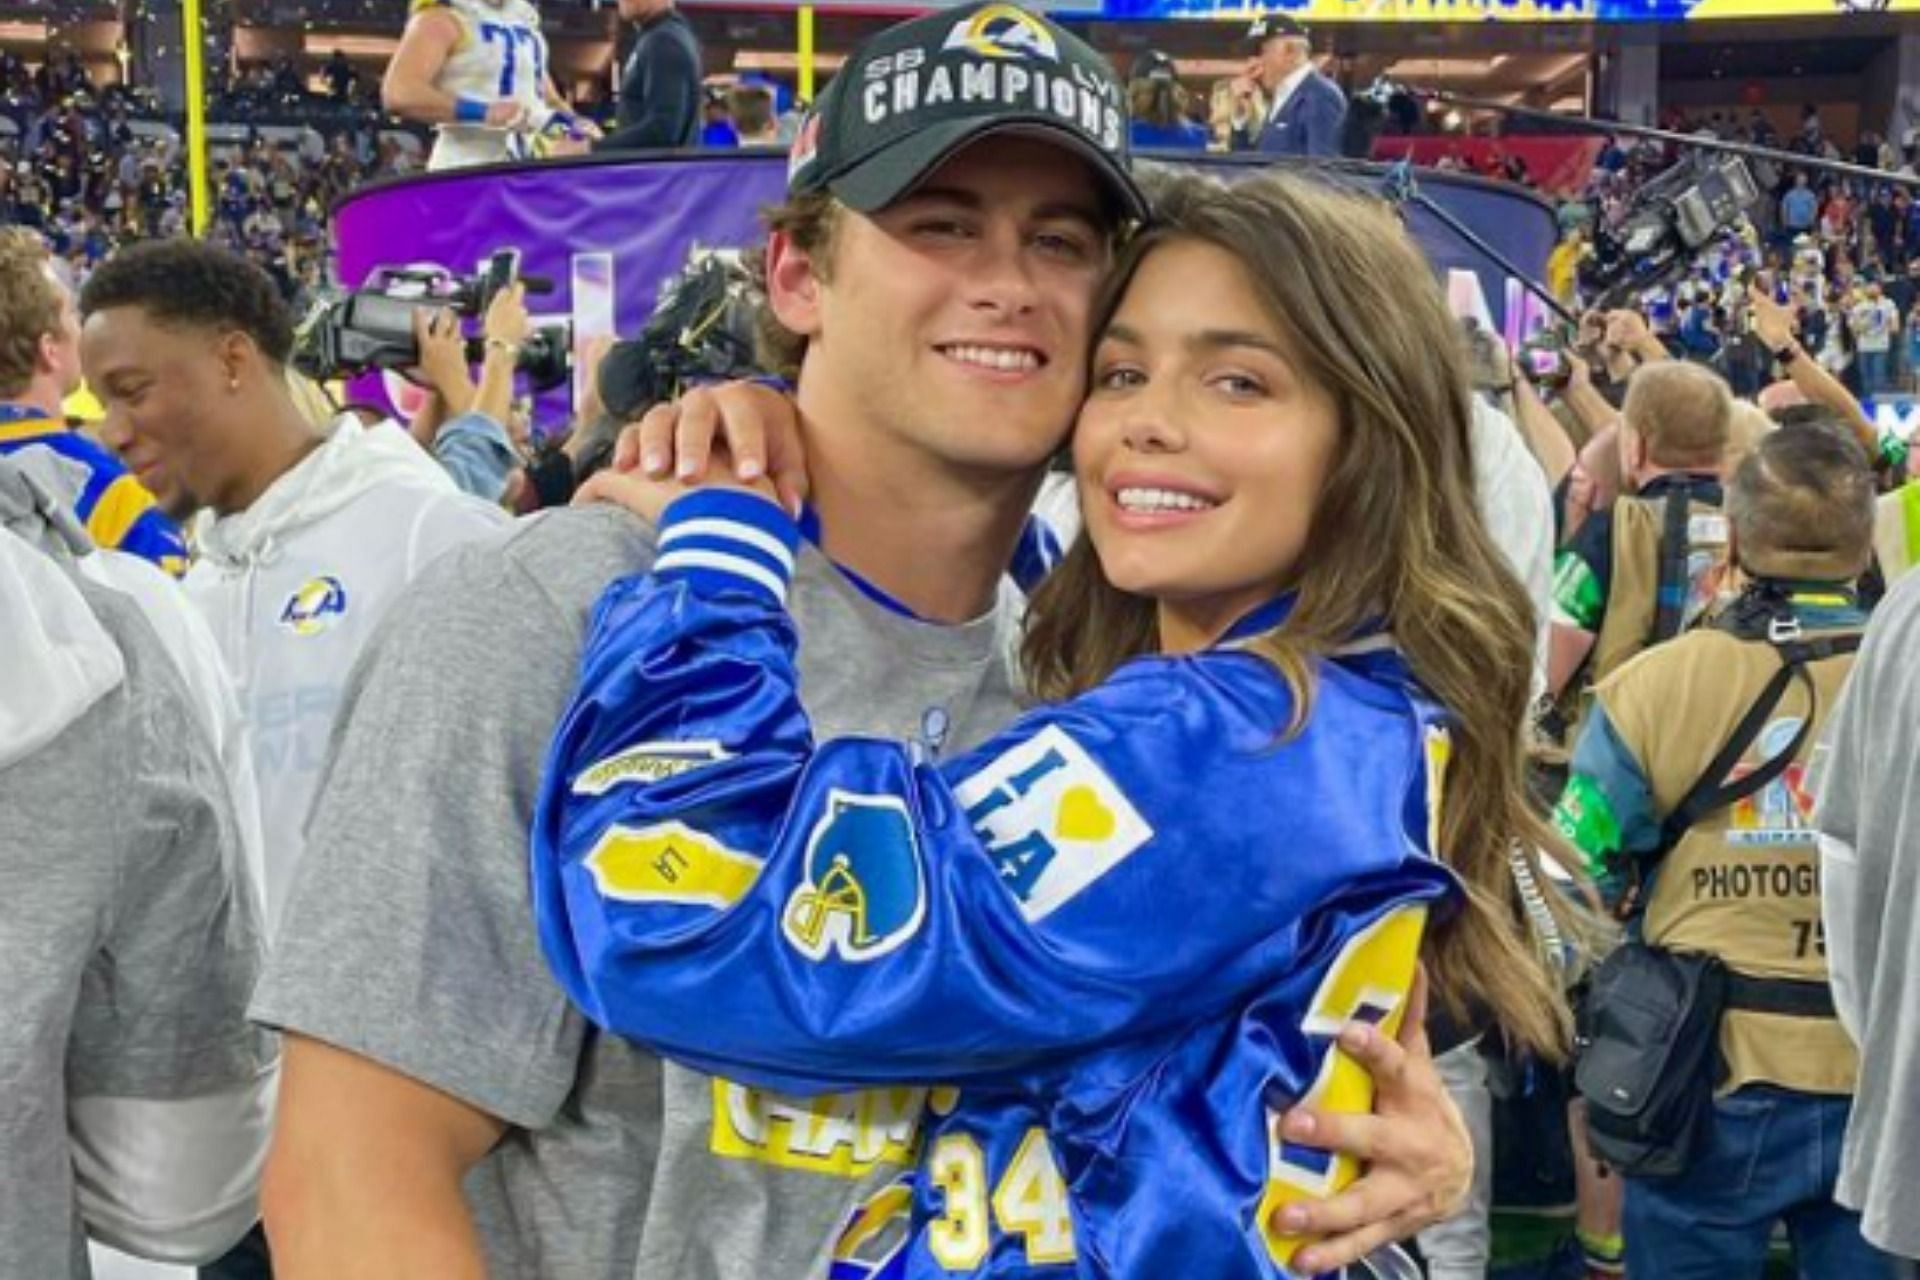 Hannah Ann Sluss confirms relationship with NFL player Jake Funk (hannahann/Instagram)